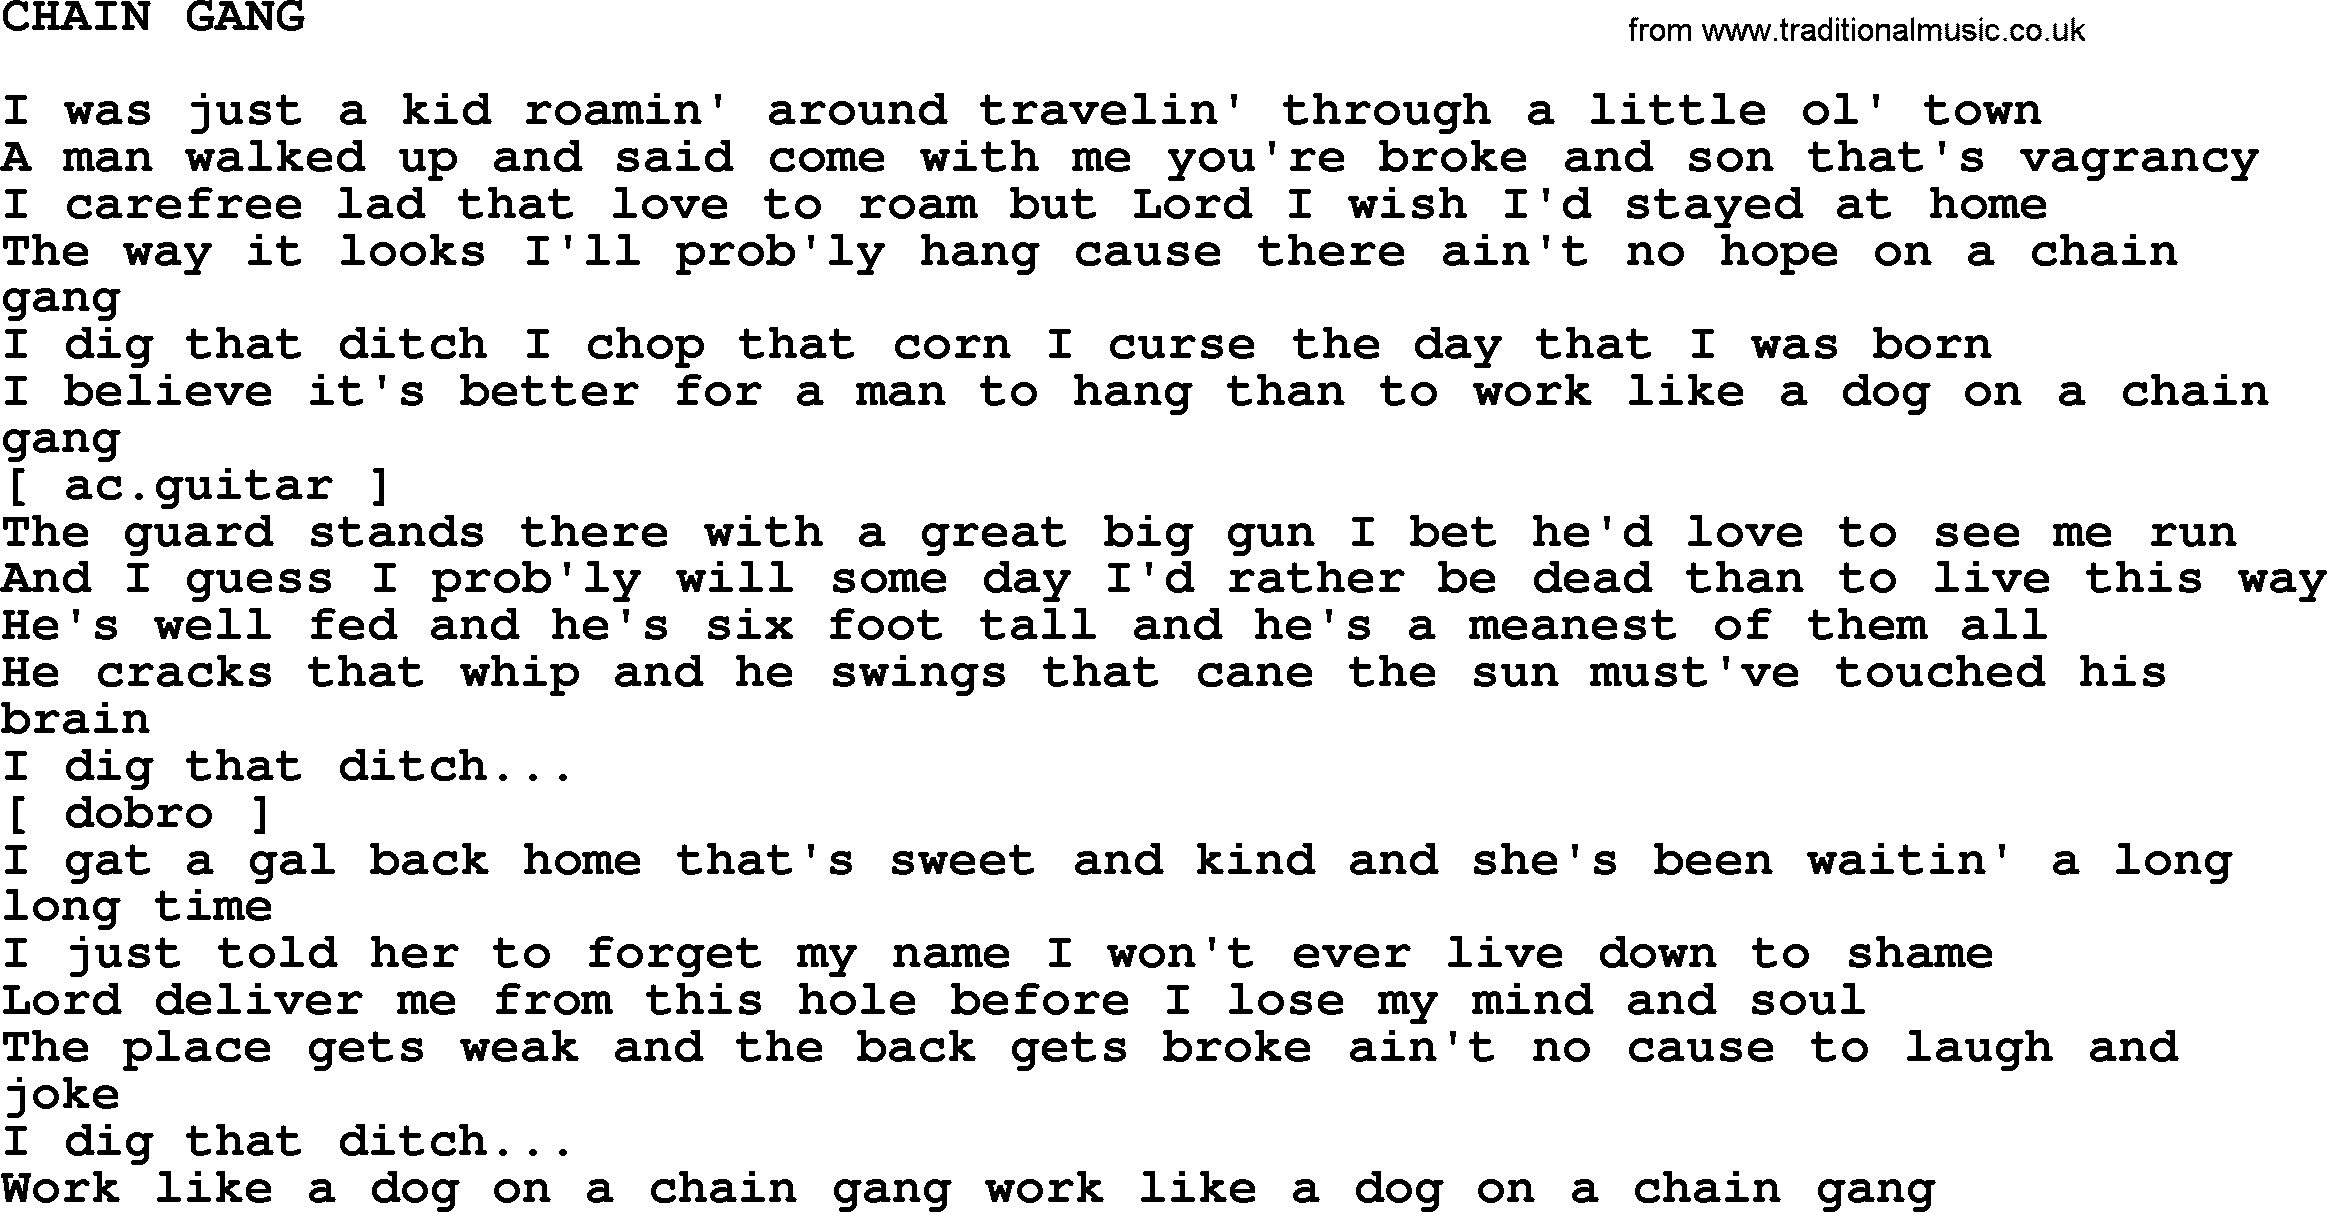 Johnny Cash song Chain Gang.txt lyrics